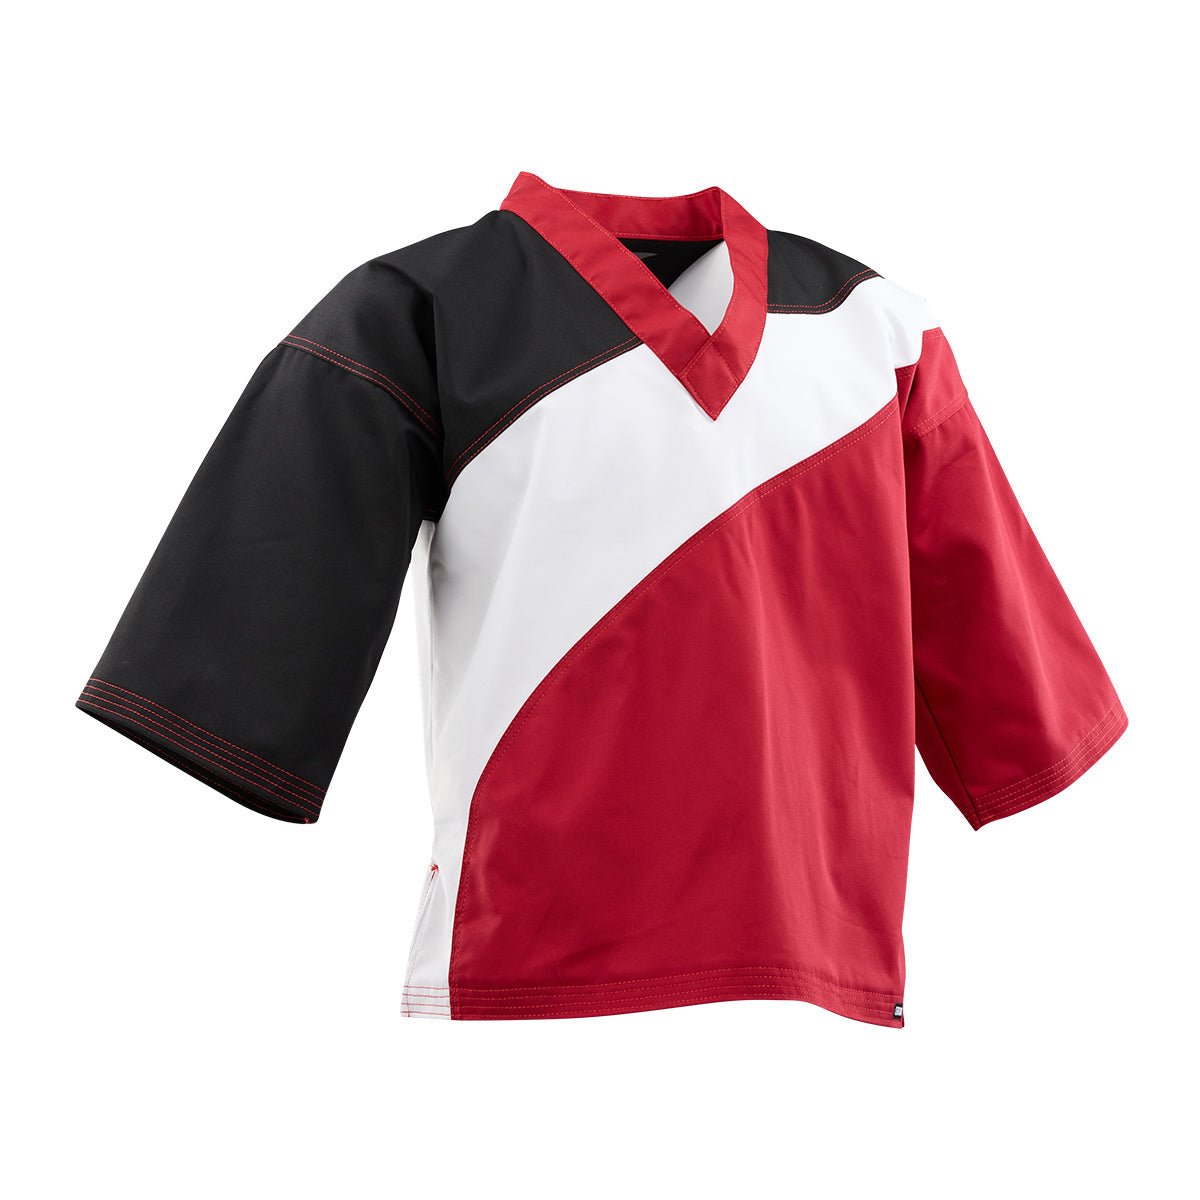 Tri-Color Diagonal Program Uniform Top Black Red White